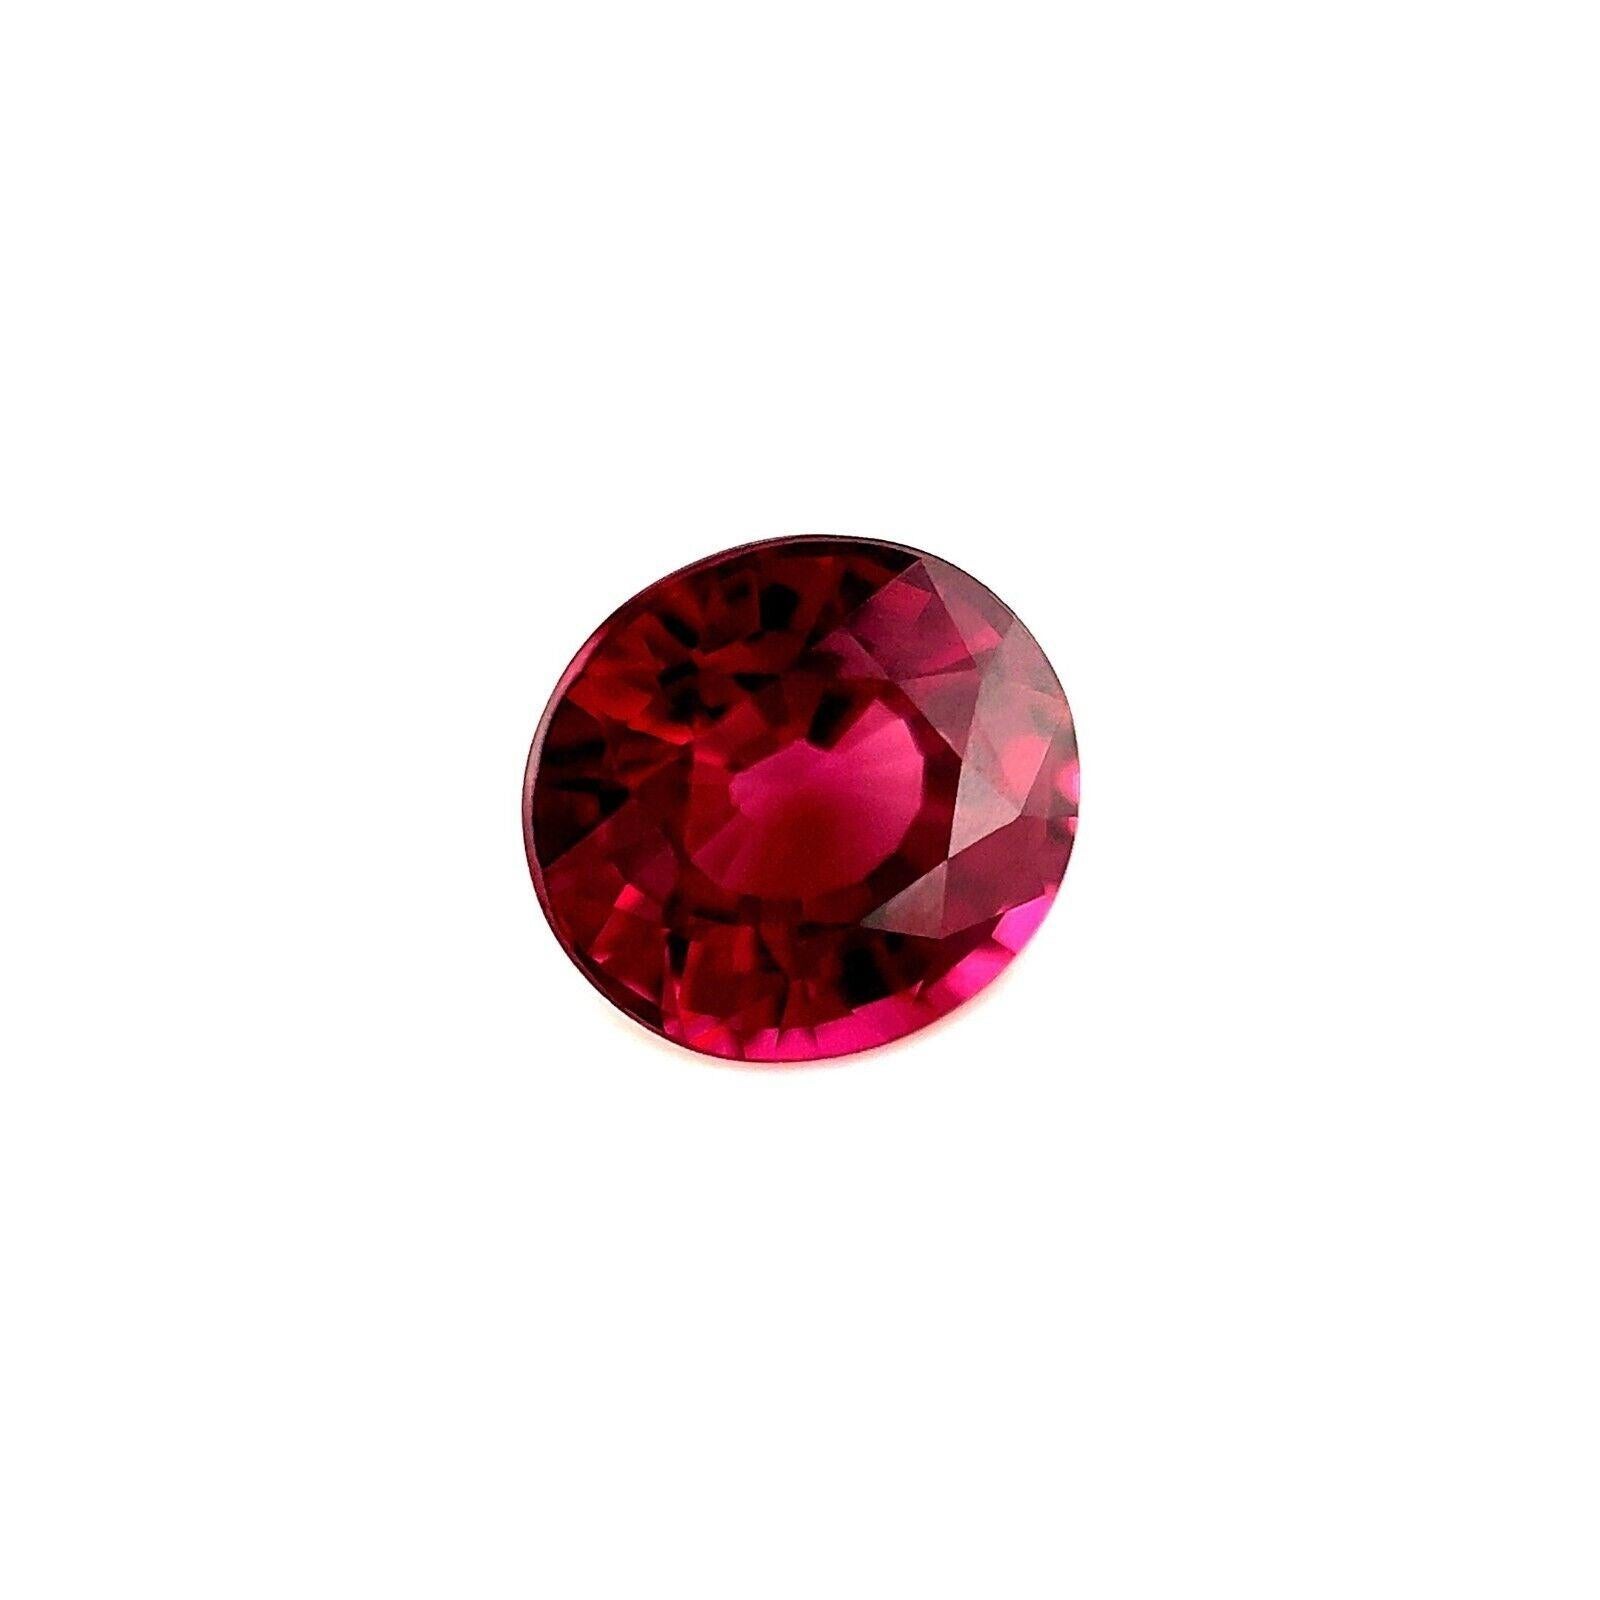 1.89ct Pink Purple Natural Rhodolite Garnet Oval Cut Loose Gemstone 7.2x6.6mm VS

Fine Natural Rhodolite Garnet Gemstone.
1.89 Carat with a beautiful vivid purple pink colour and excellent clarity, very clean gem. VS
Has an excellent oval cut with